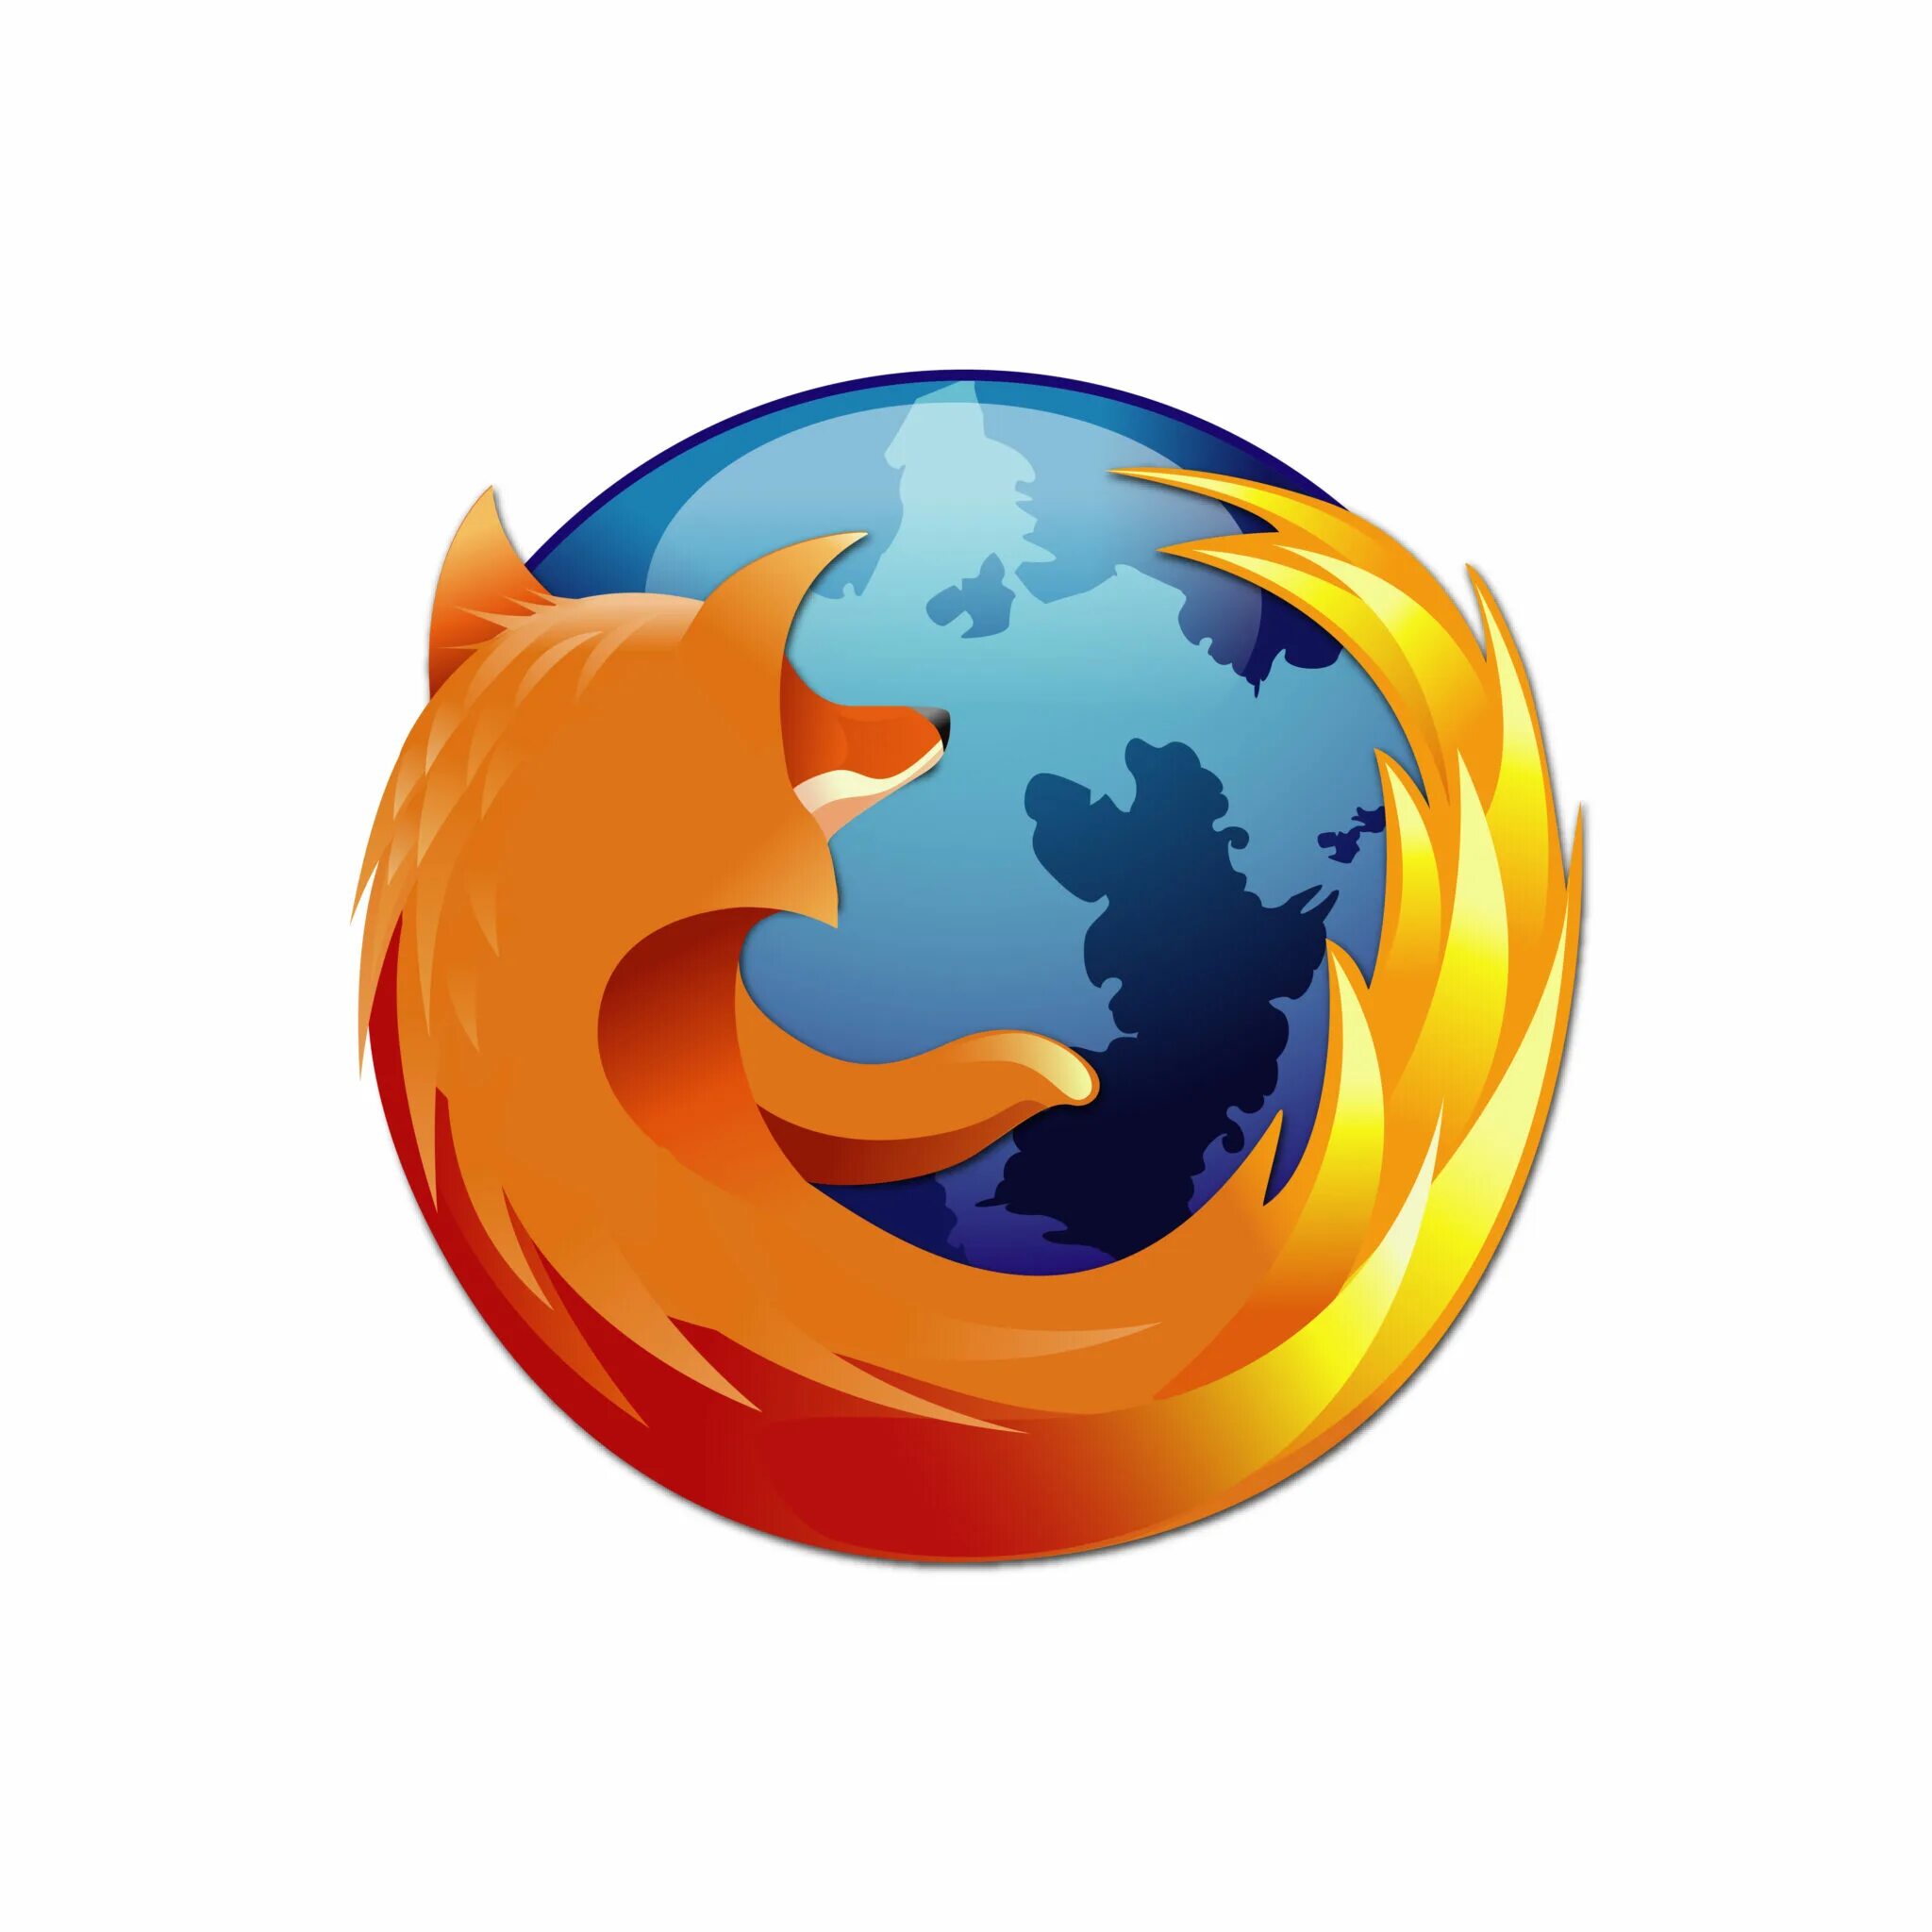 Add firefox. Логотип фаерфокс. Шаблон логотипа Firefox. Концепты логотипа Mozilla. Логотип Firefox ПСД.